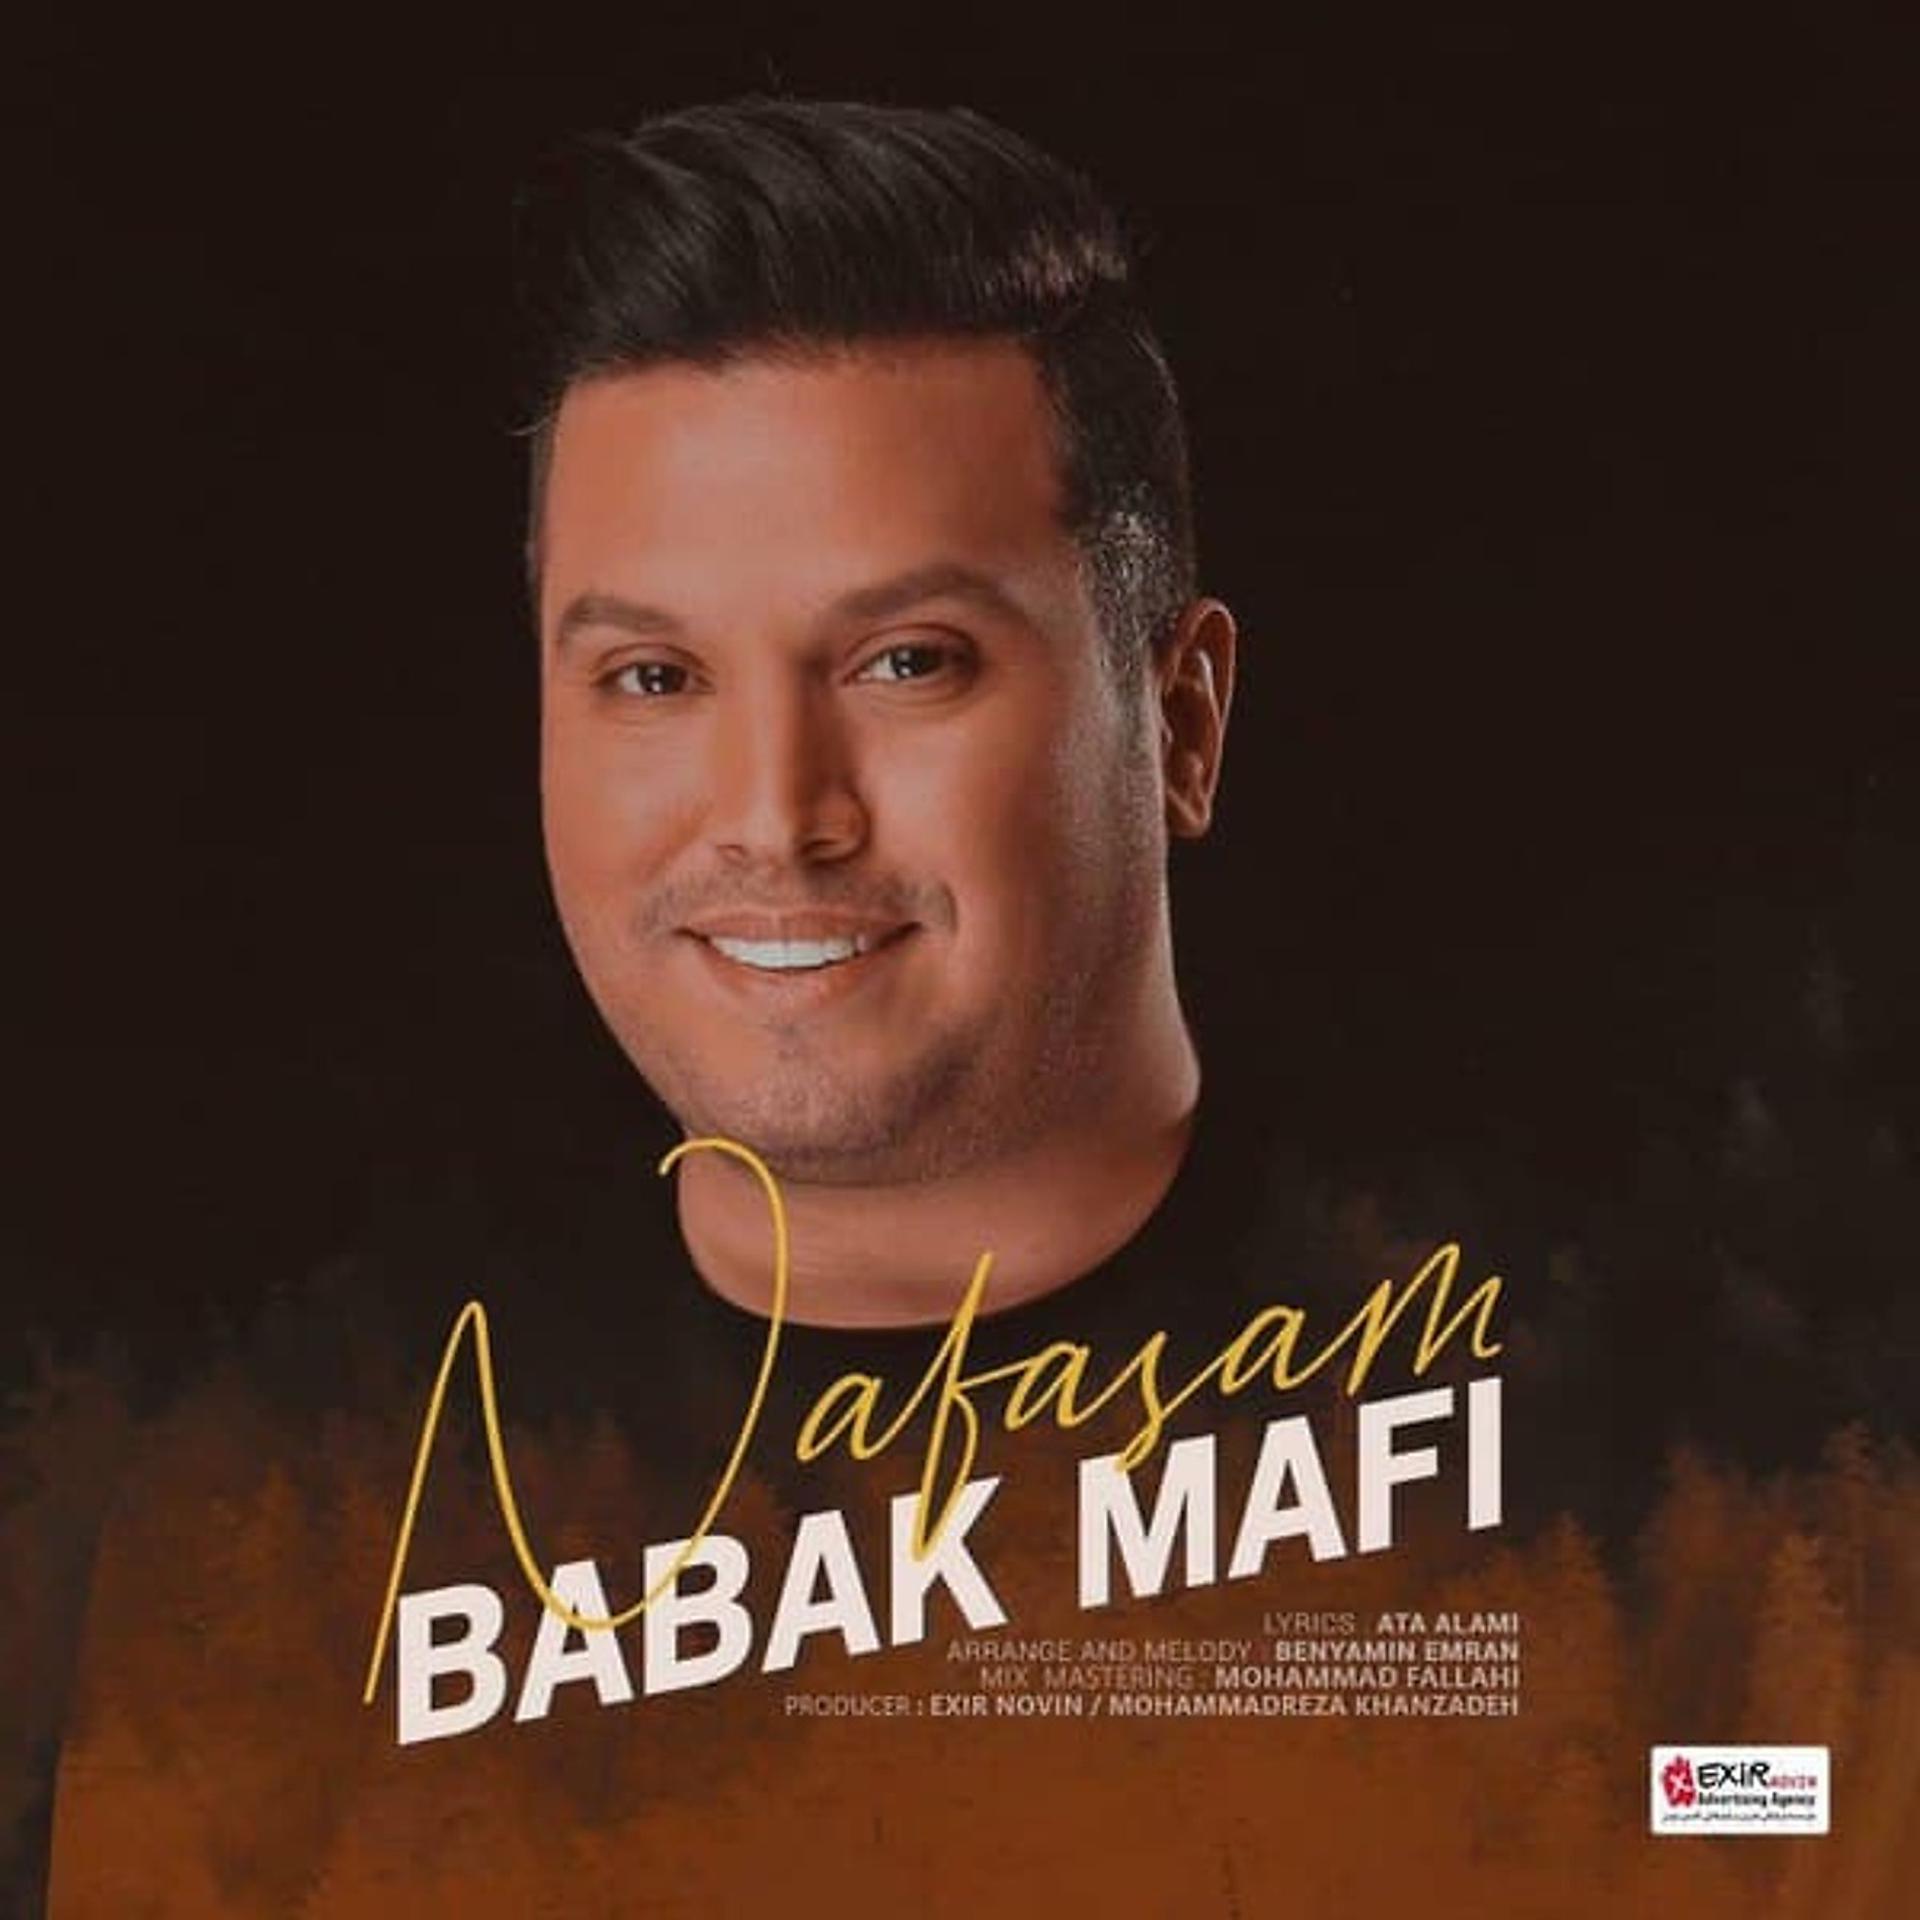 Постер к треку Babak Mafi - Nafasam